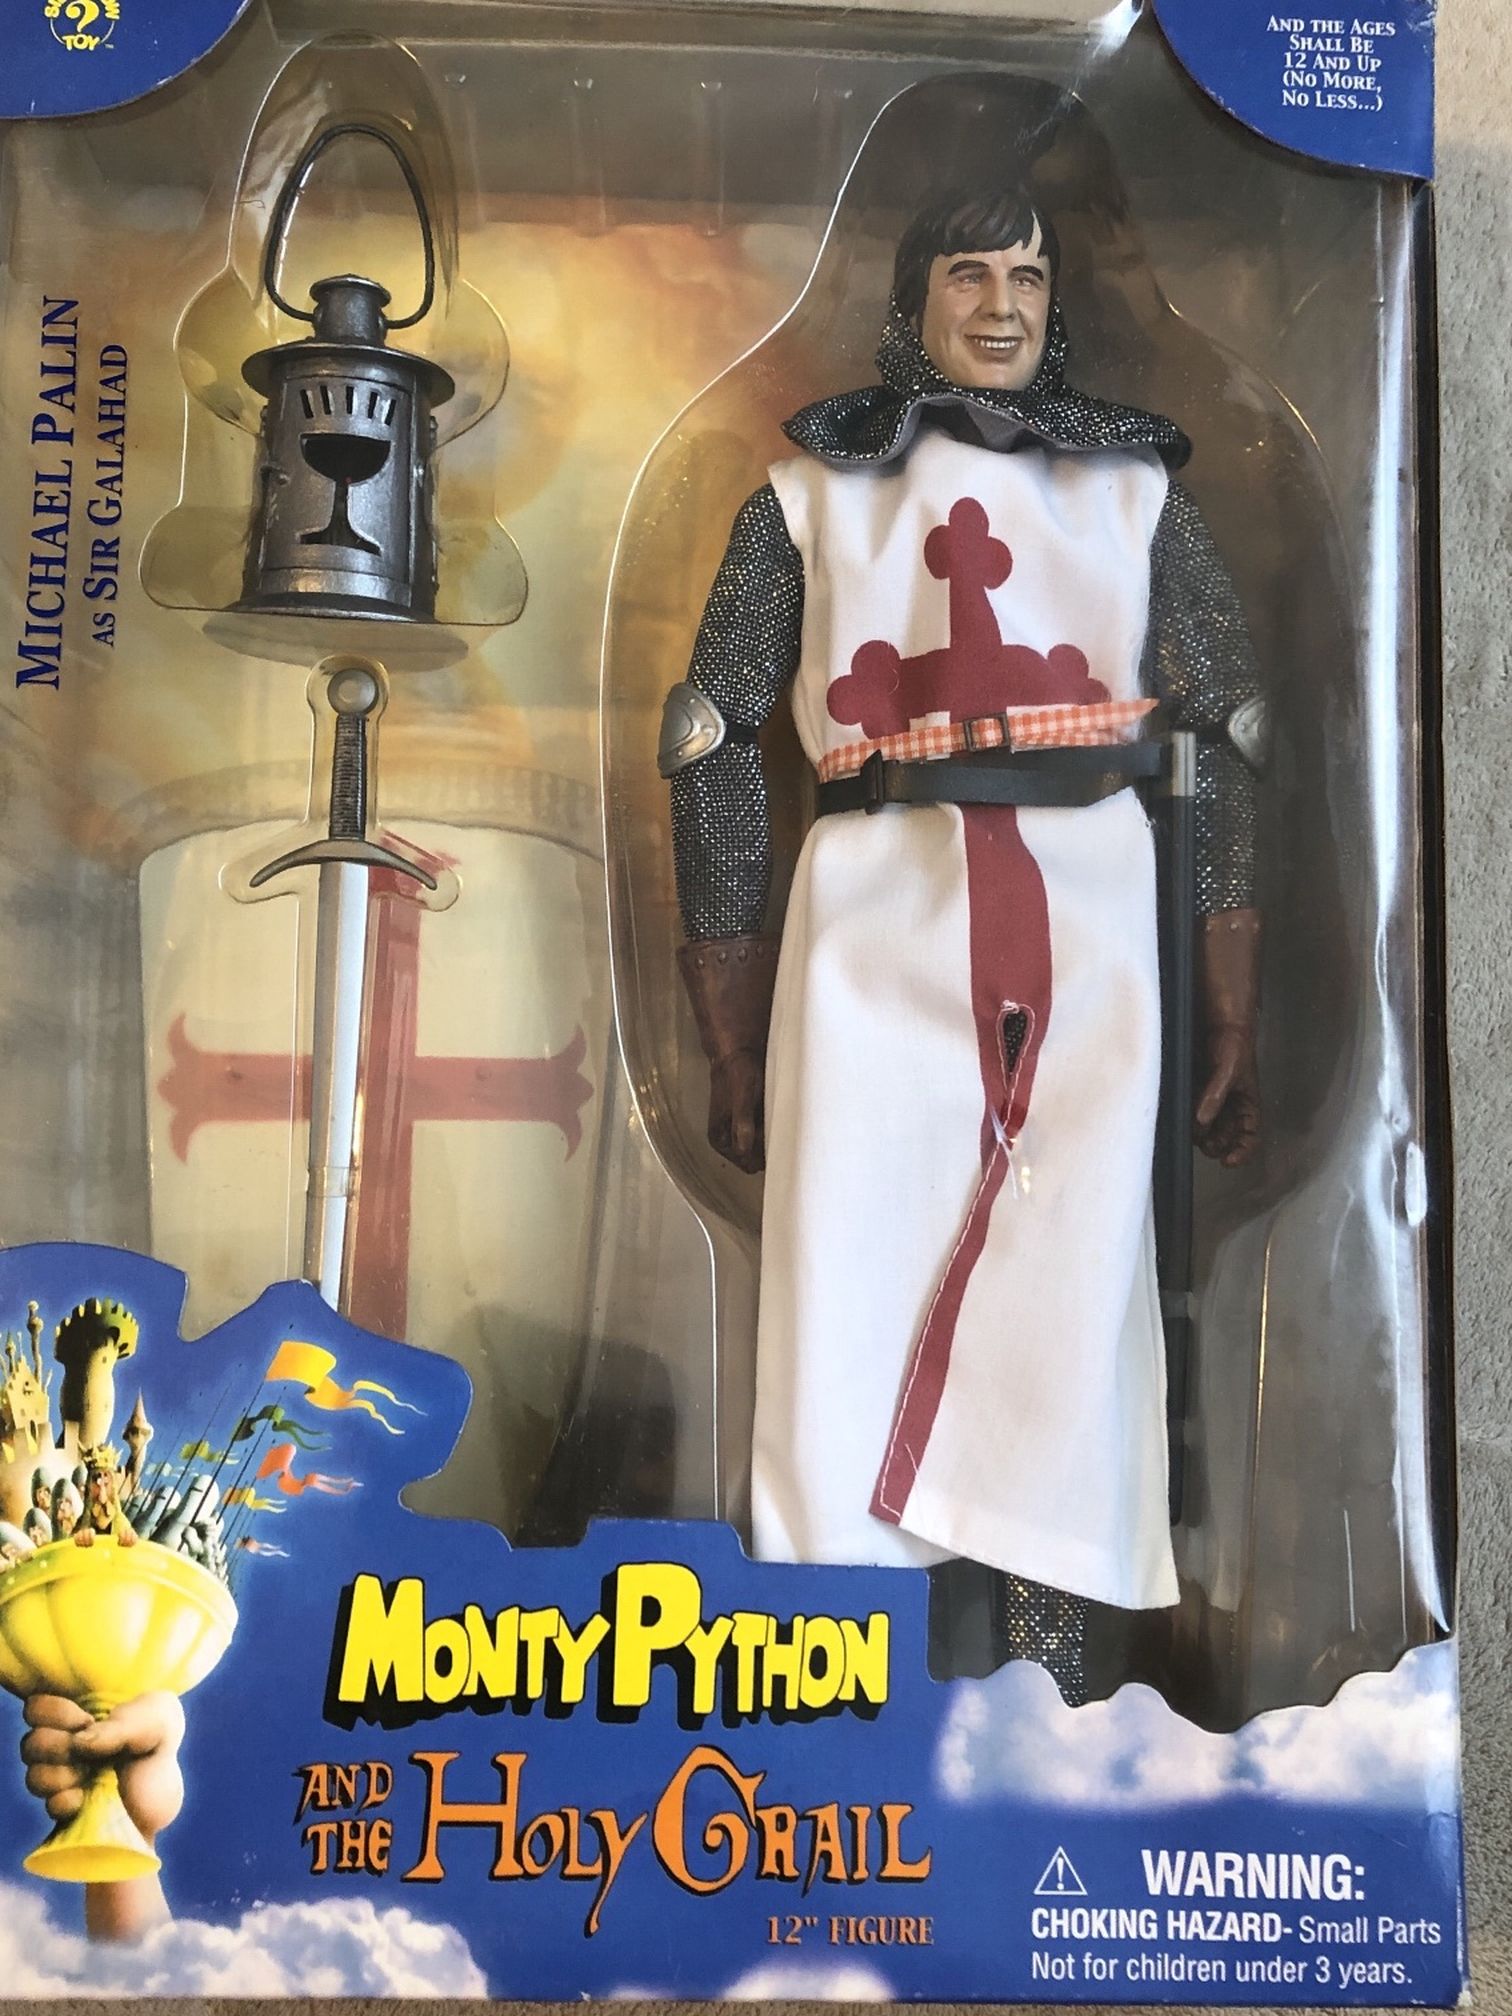 Monty Python Sir Galahad 12” Figurine New In Box